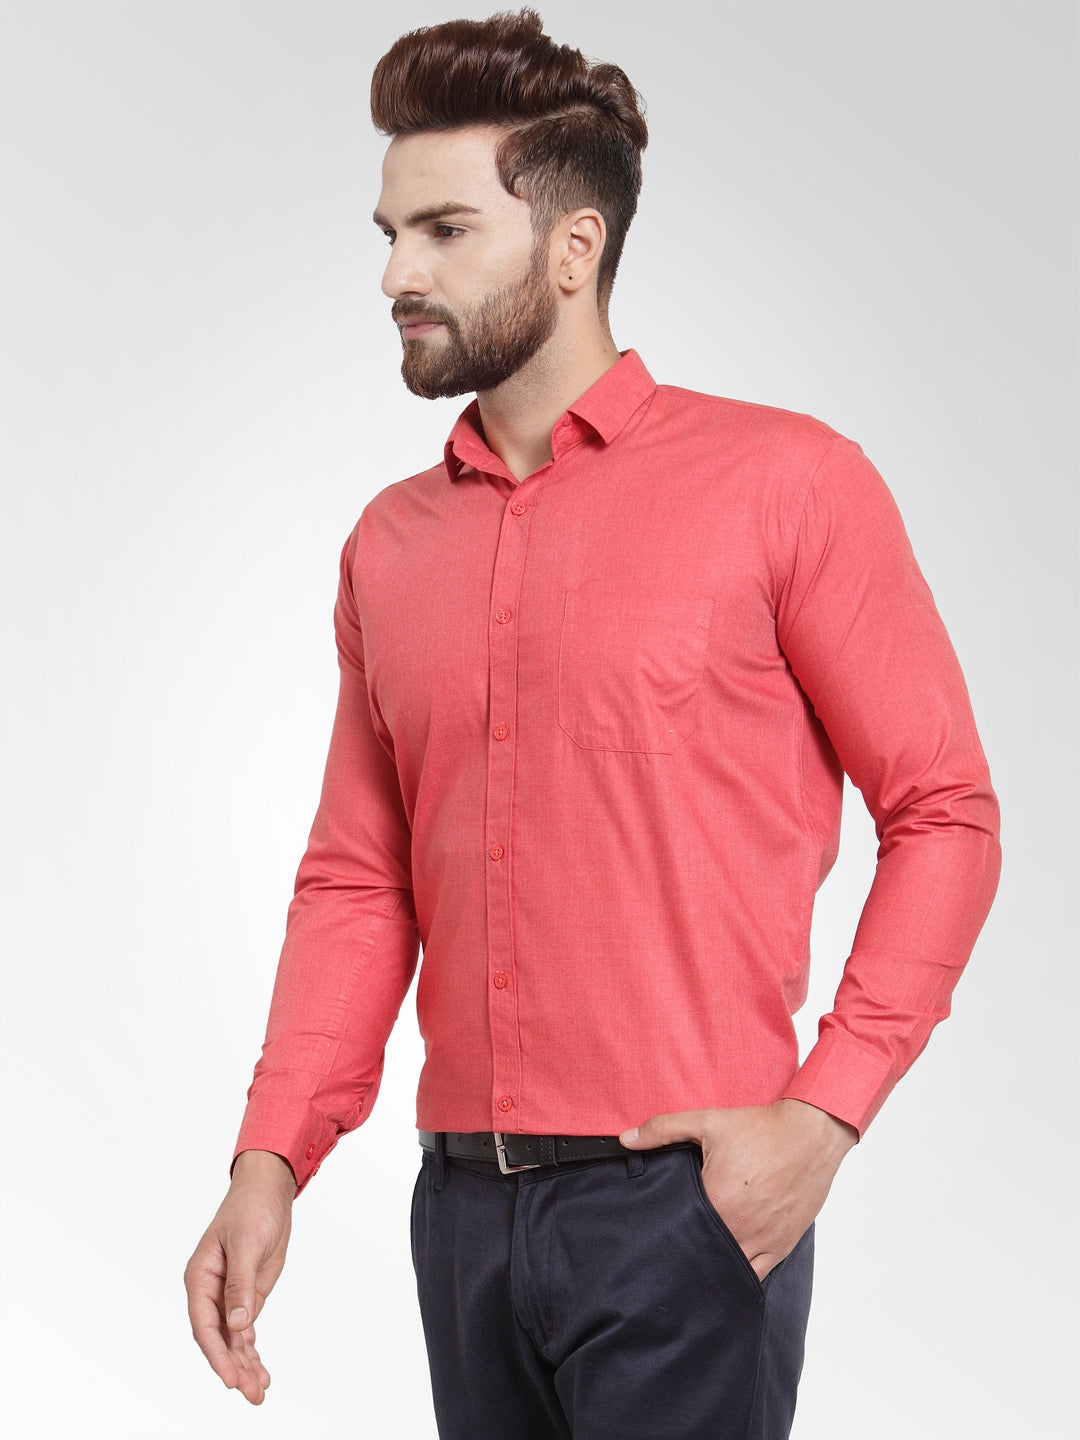 Men's Cotton Solid Desire Orange Formal Shirt's ( SF 361Desire ) - Jainish